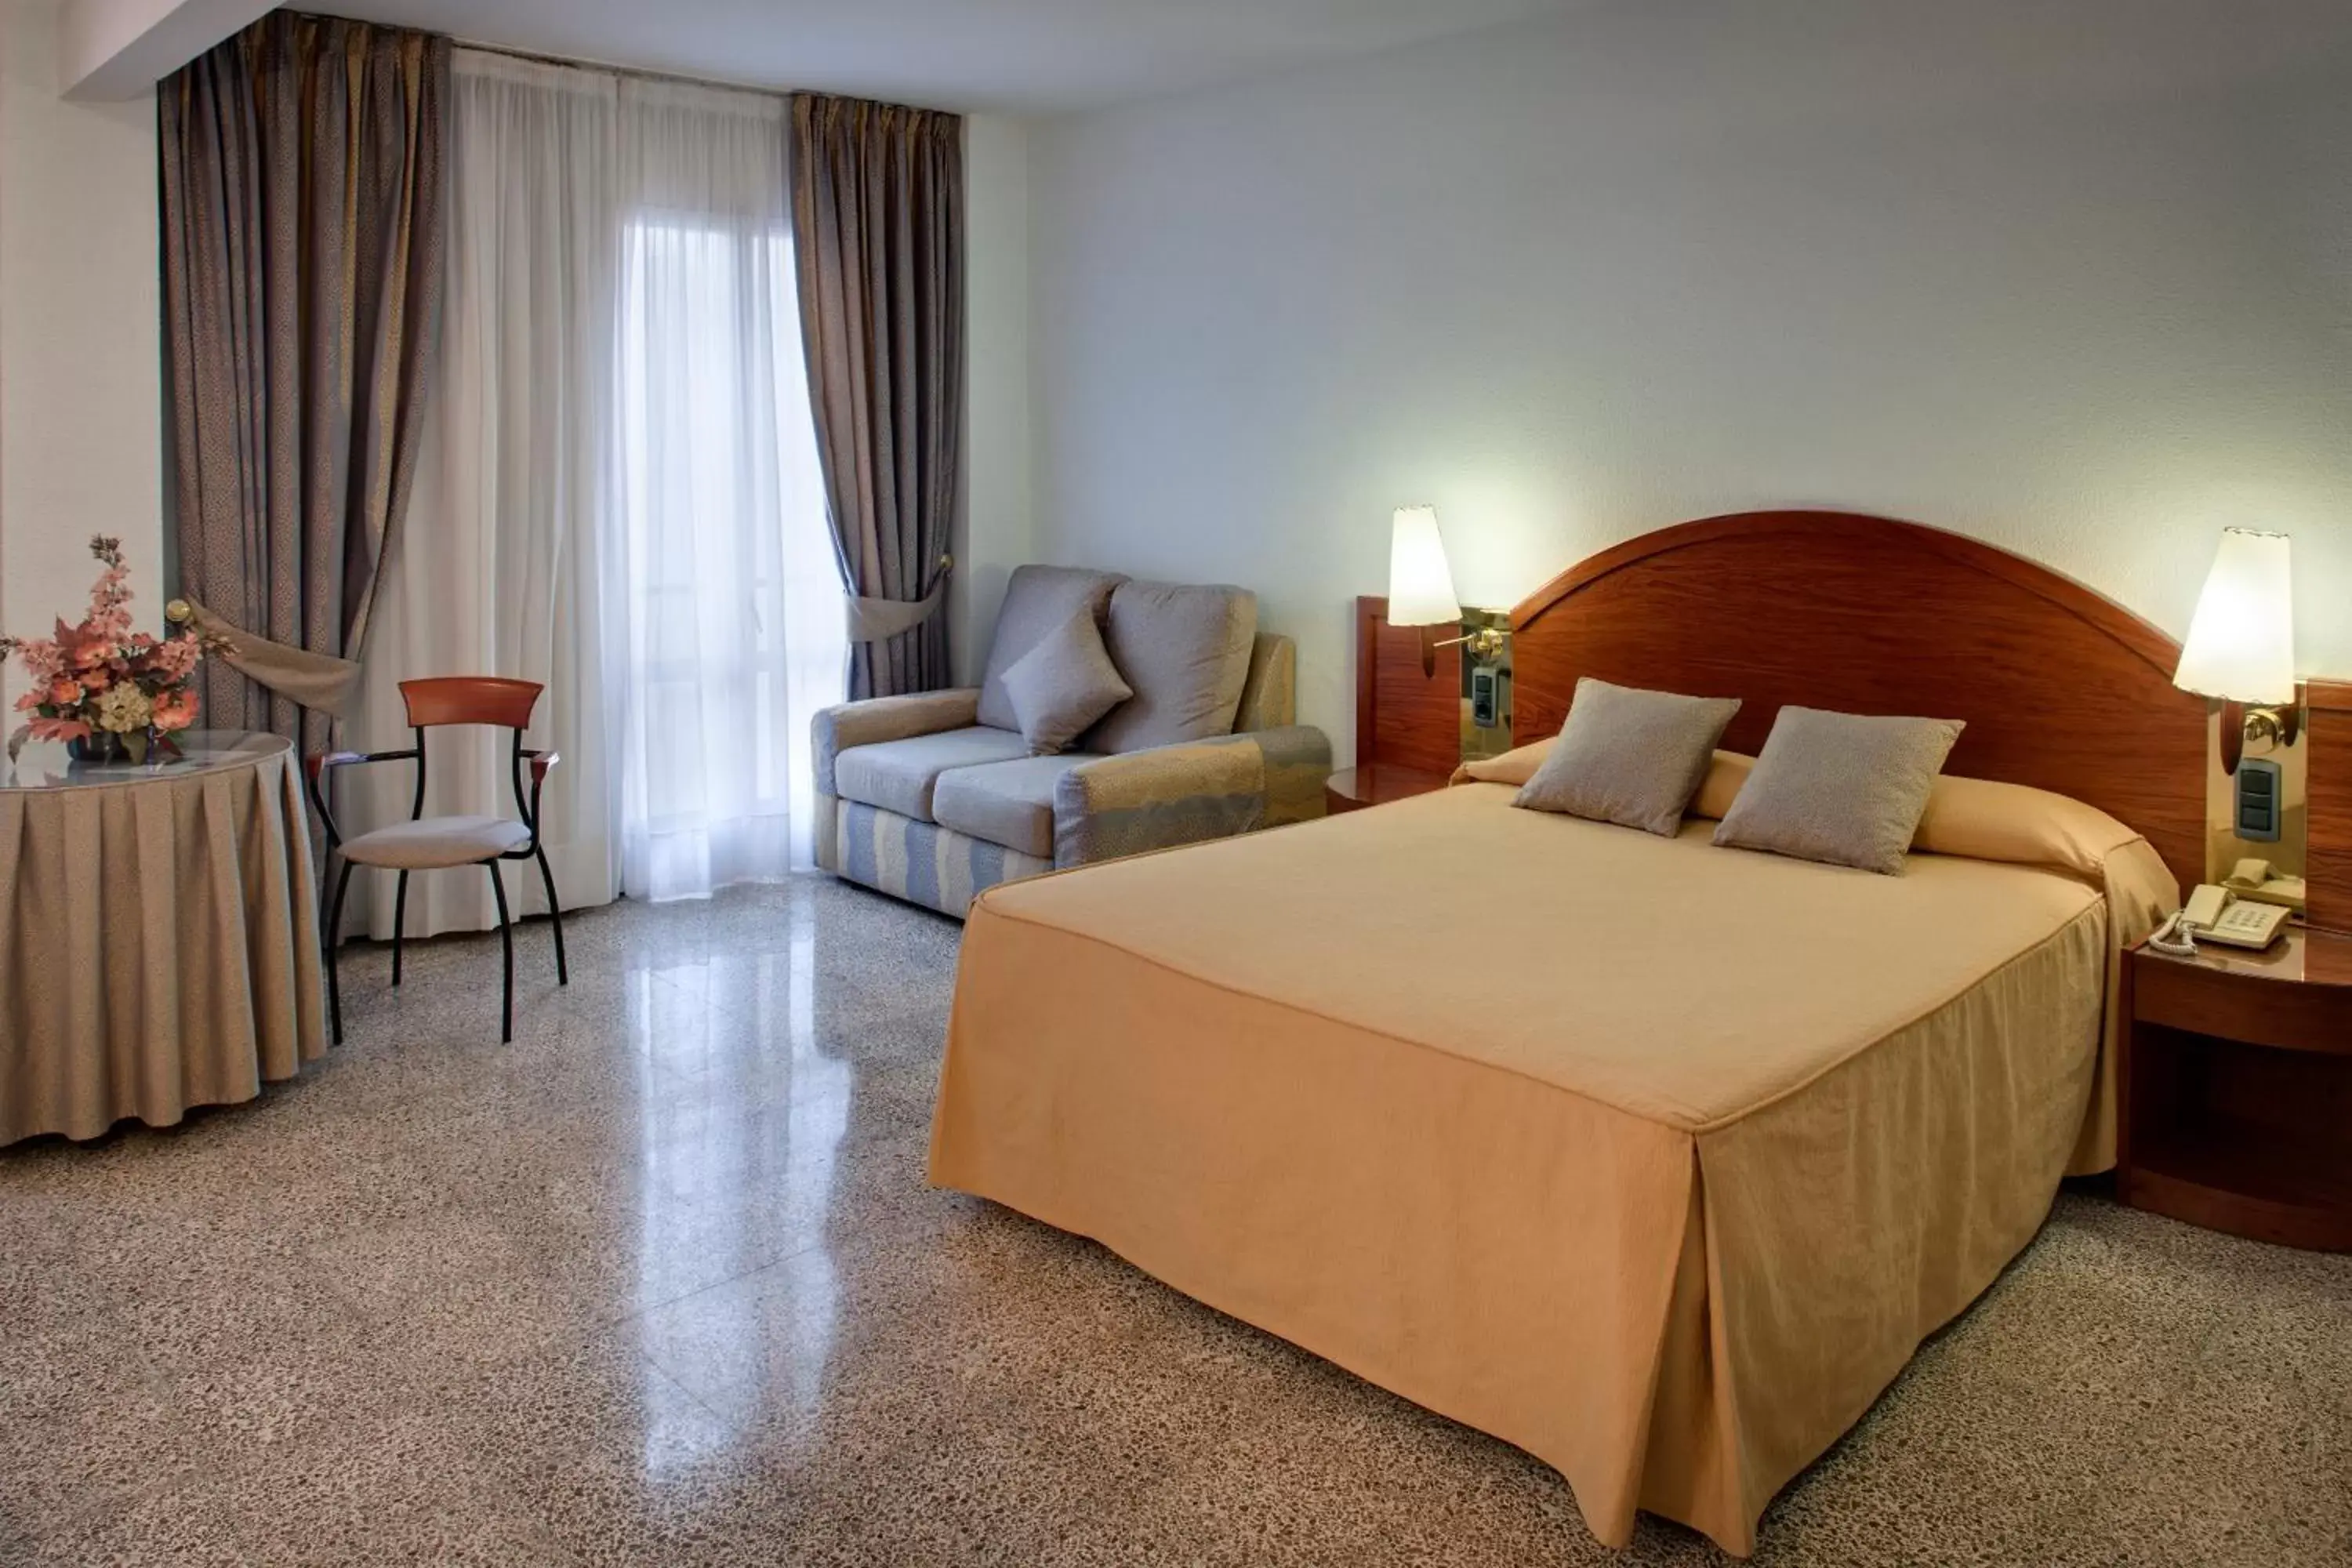 Bedroom, Room Photo in Hotel Gaudi